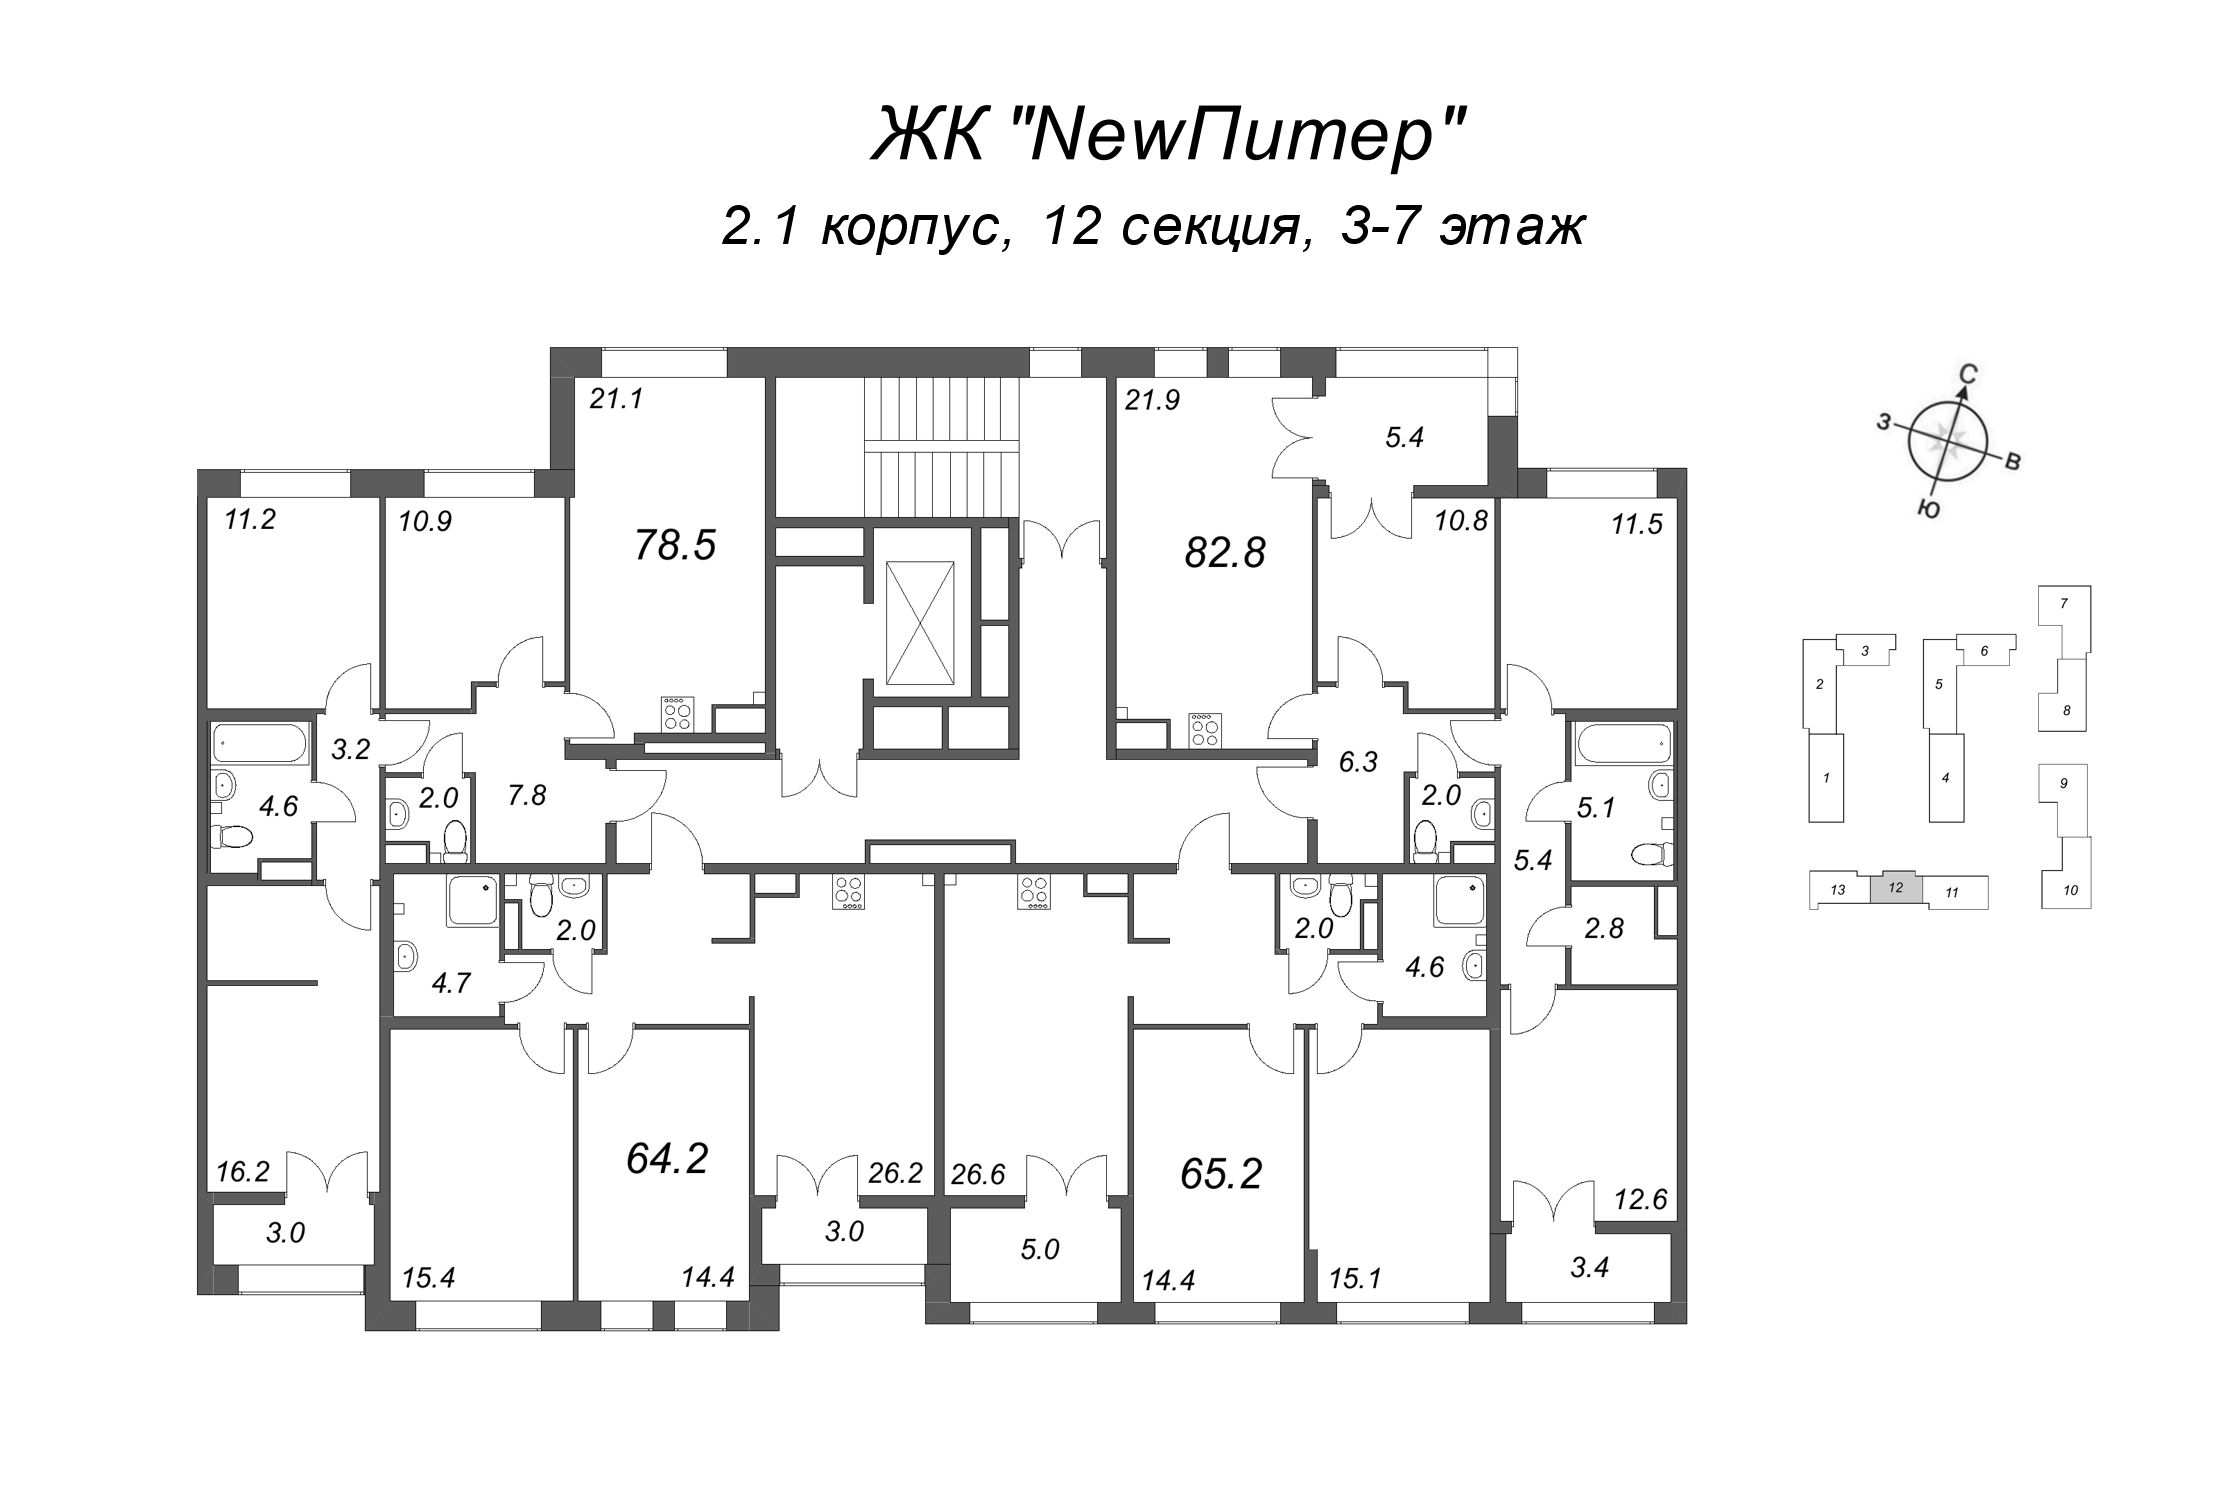 4-комнатная (Евро) квартира, 78.5 м² - планировка этажа